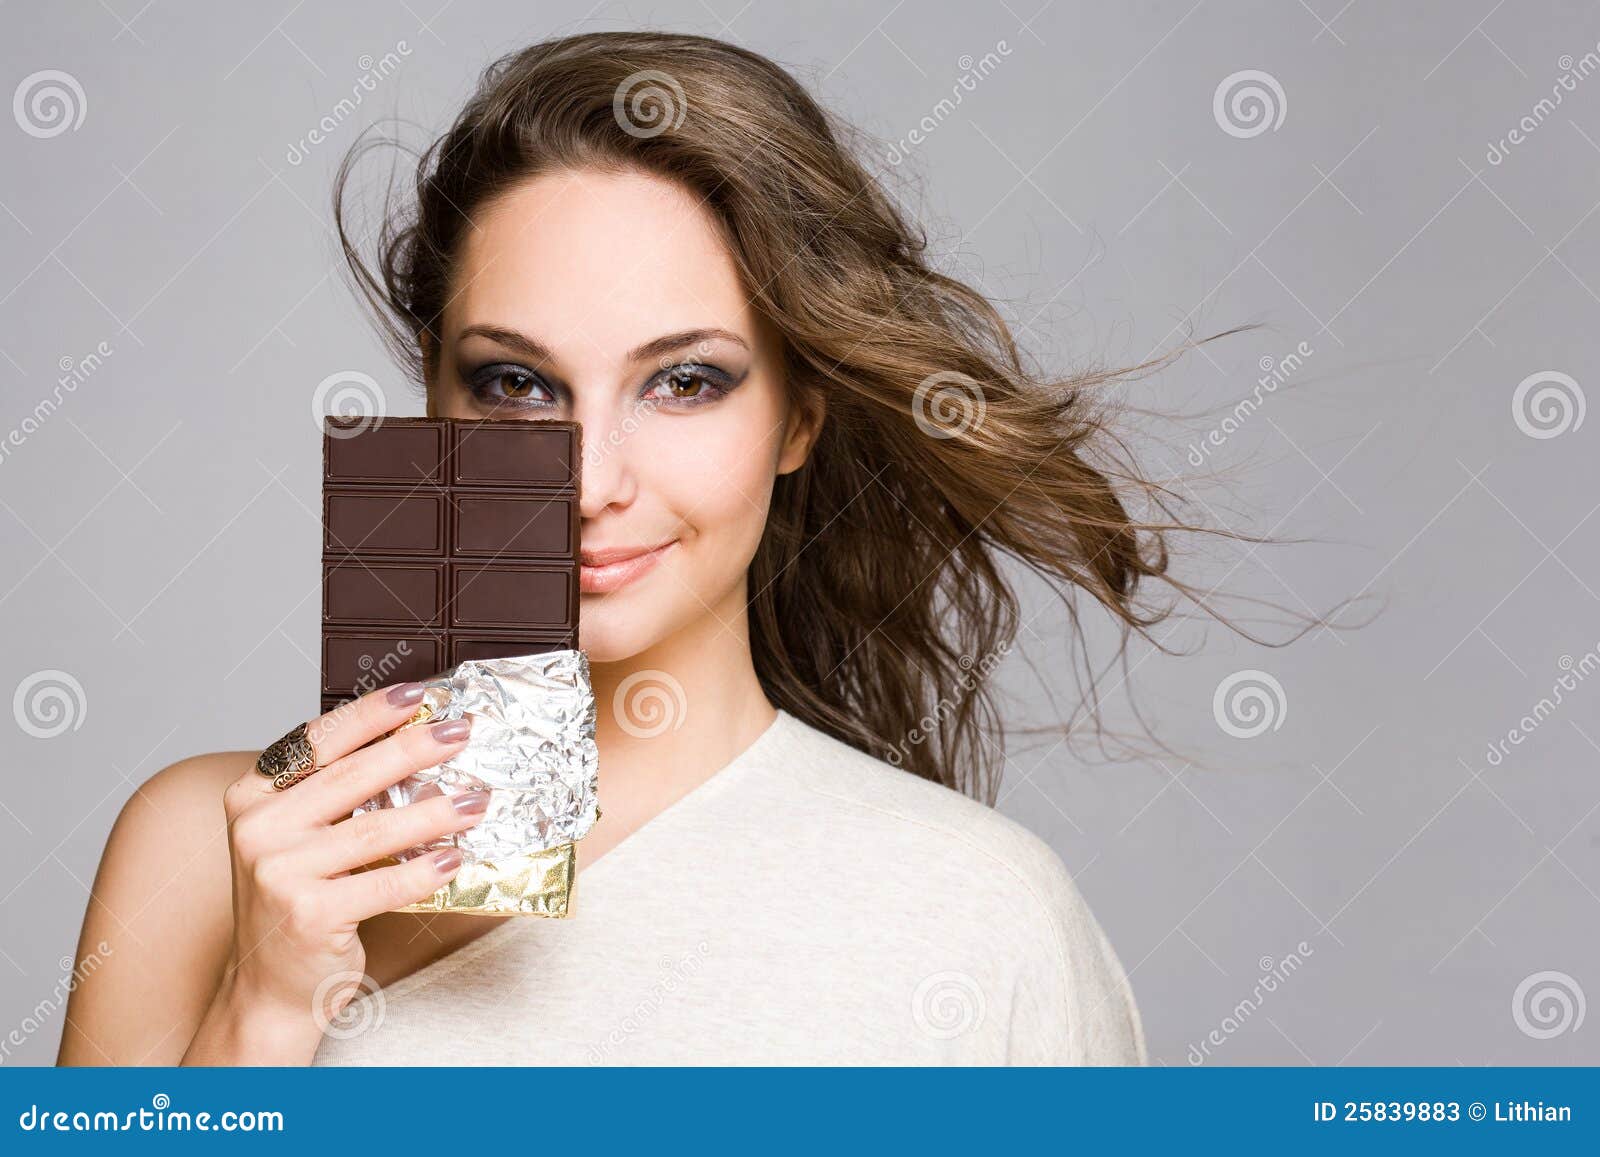 Chocolate Loving Brunette Cutie Stock Image Image Of Latino Gorgeous 25839883